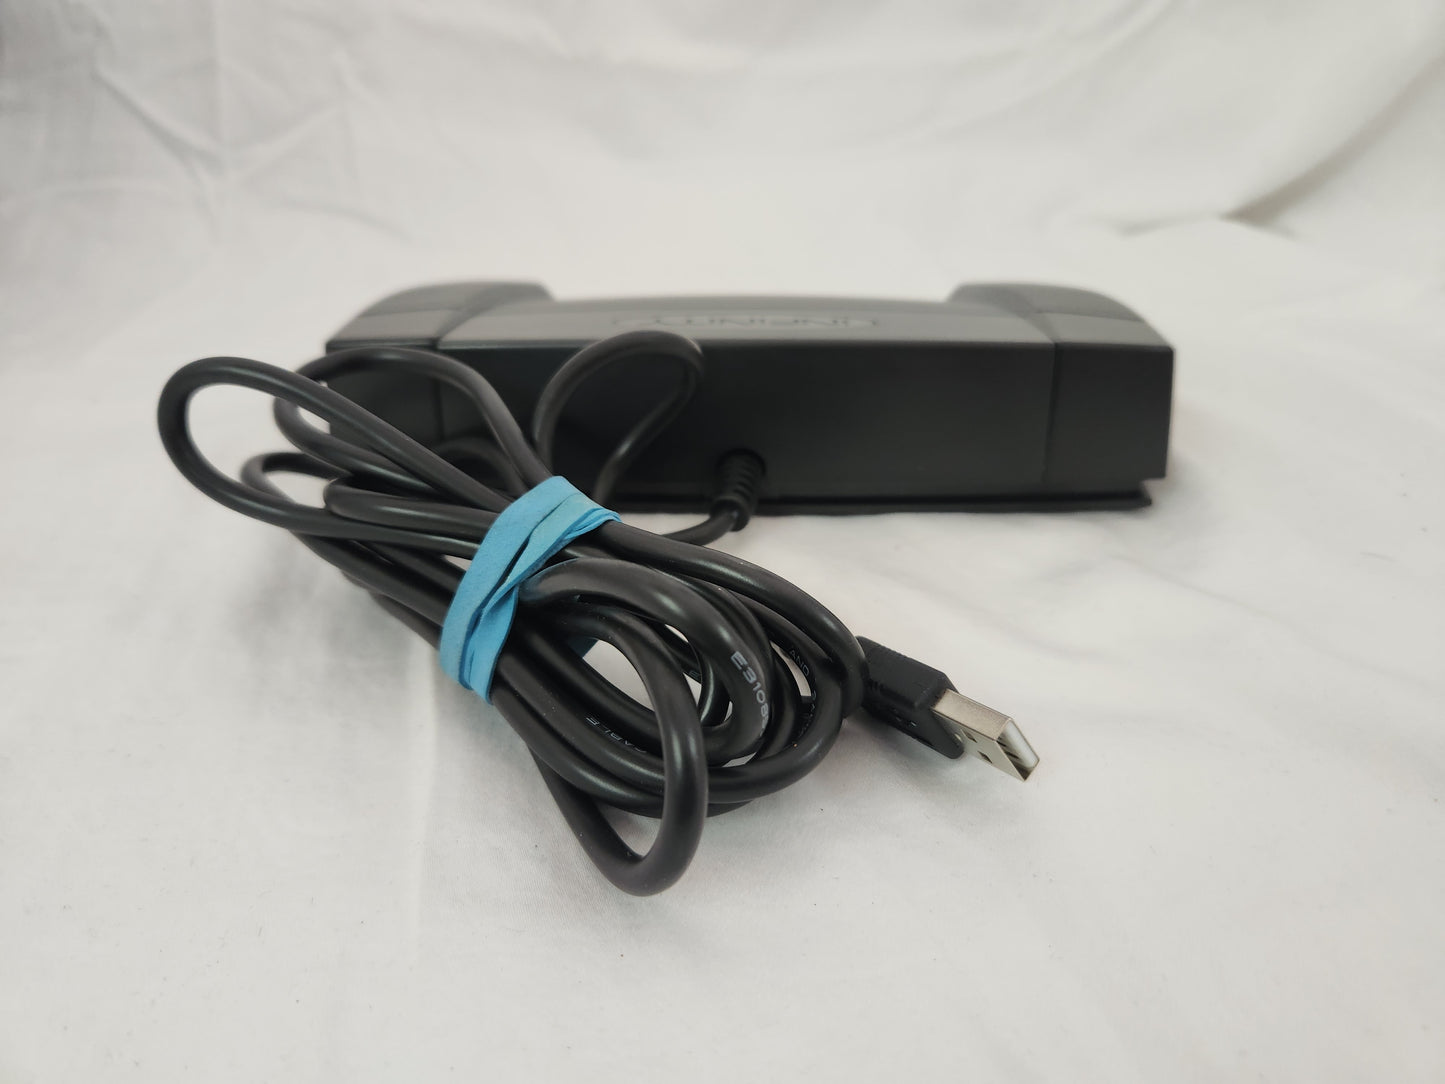 Infinity USB Digital Foot Control In-USB-2 - Tested